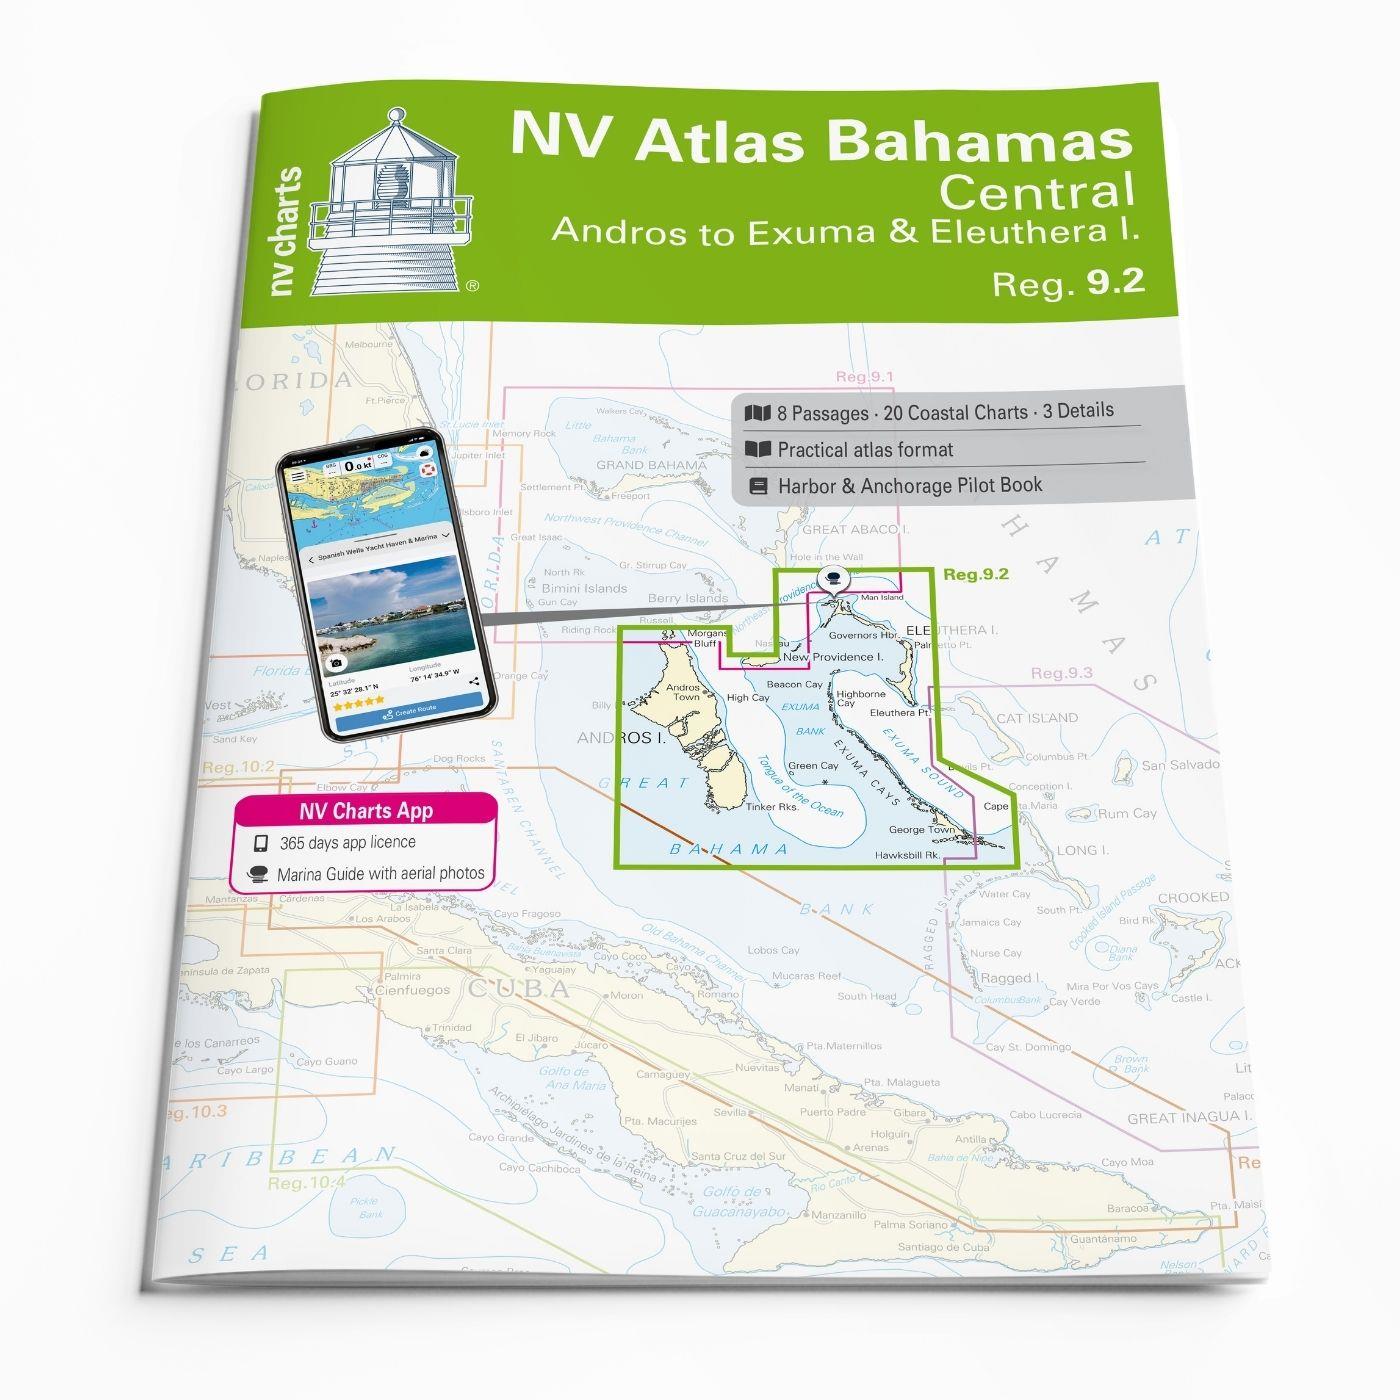 NV Charts Bahamas 9.2 - Central, Andros to Exumas & Eleuthera Islands